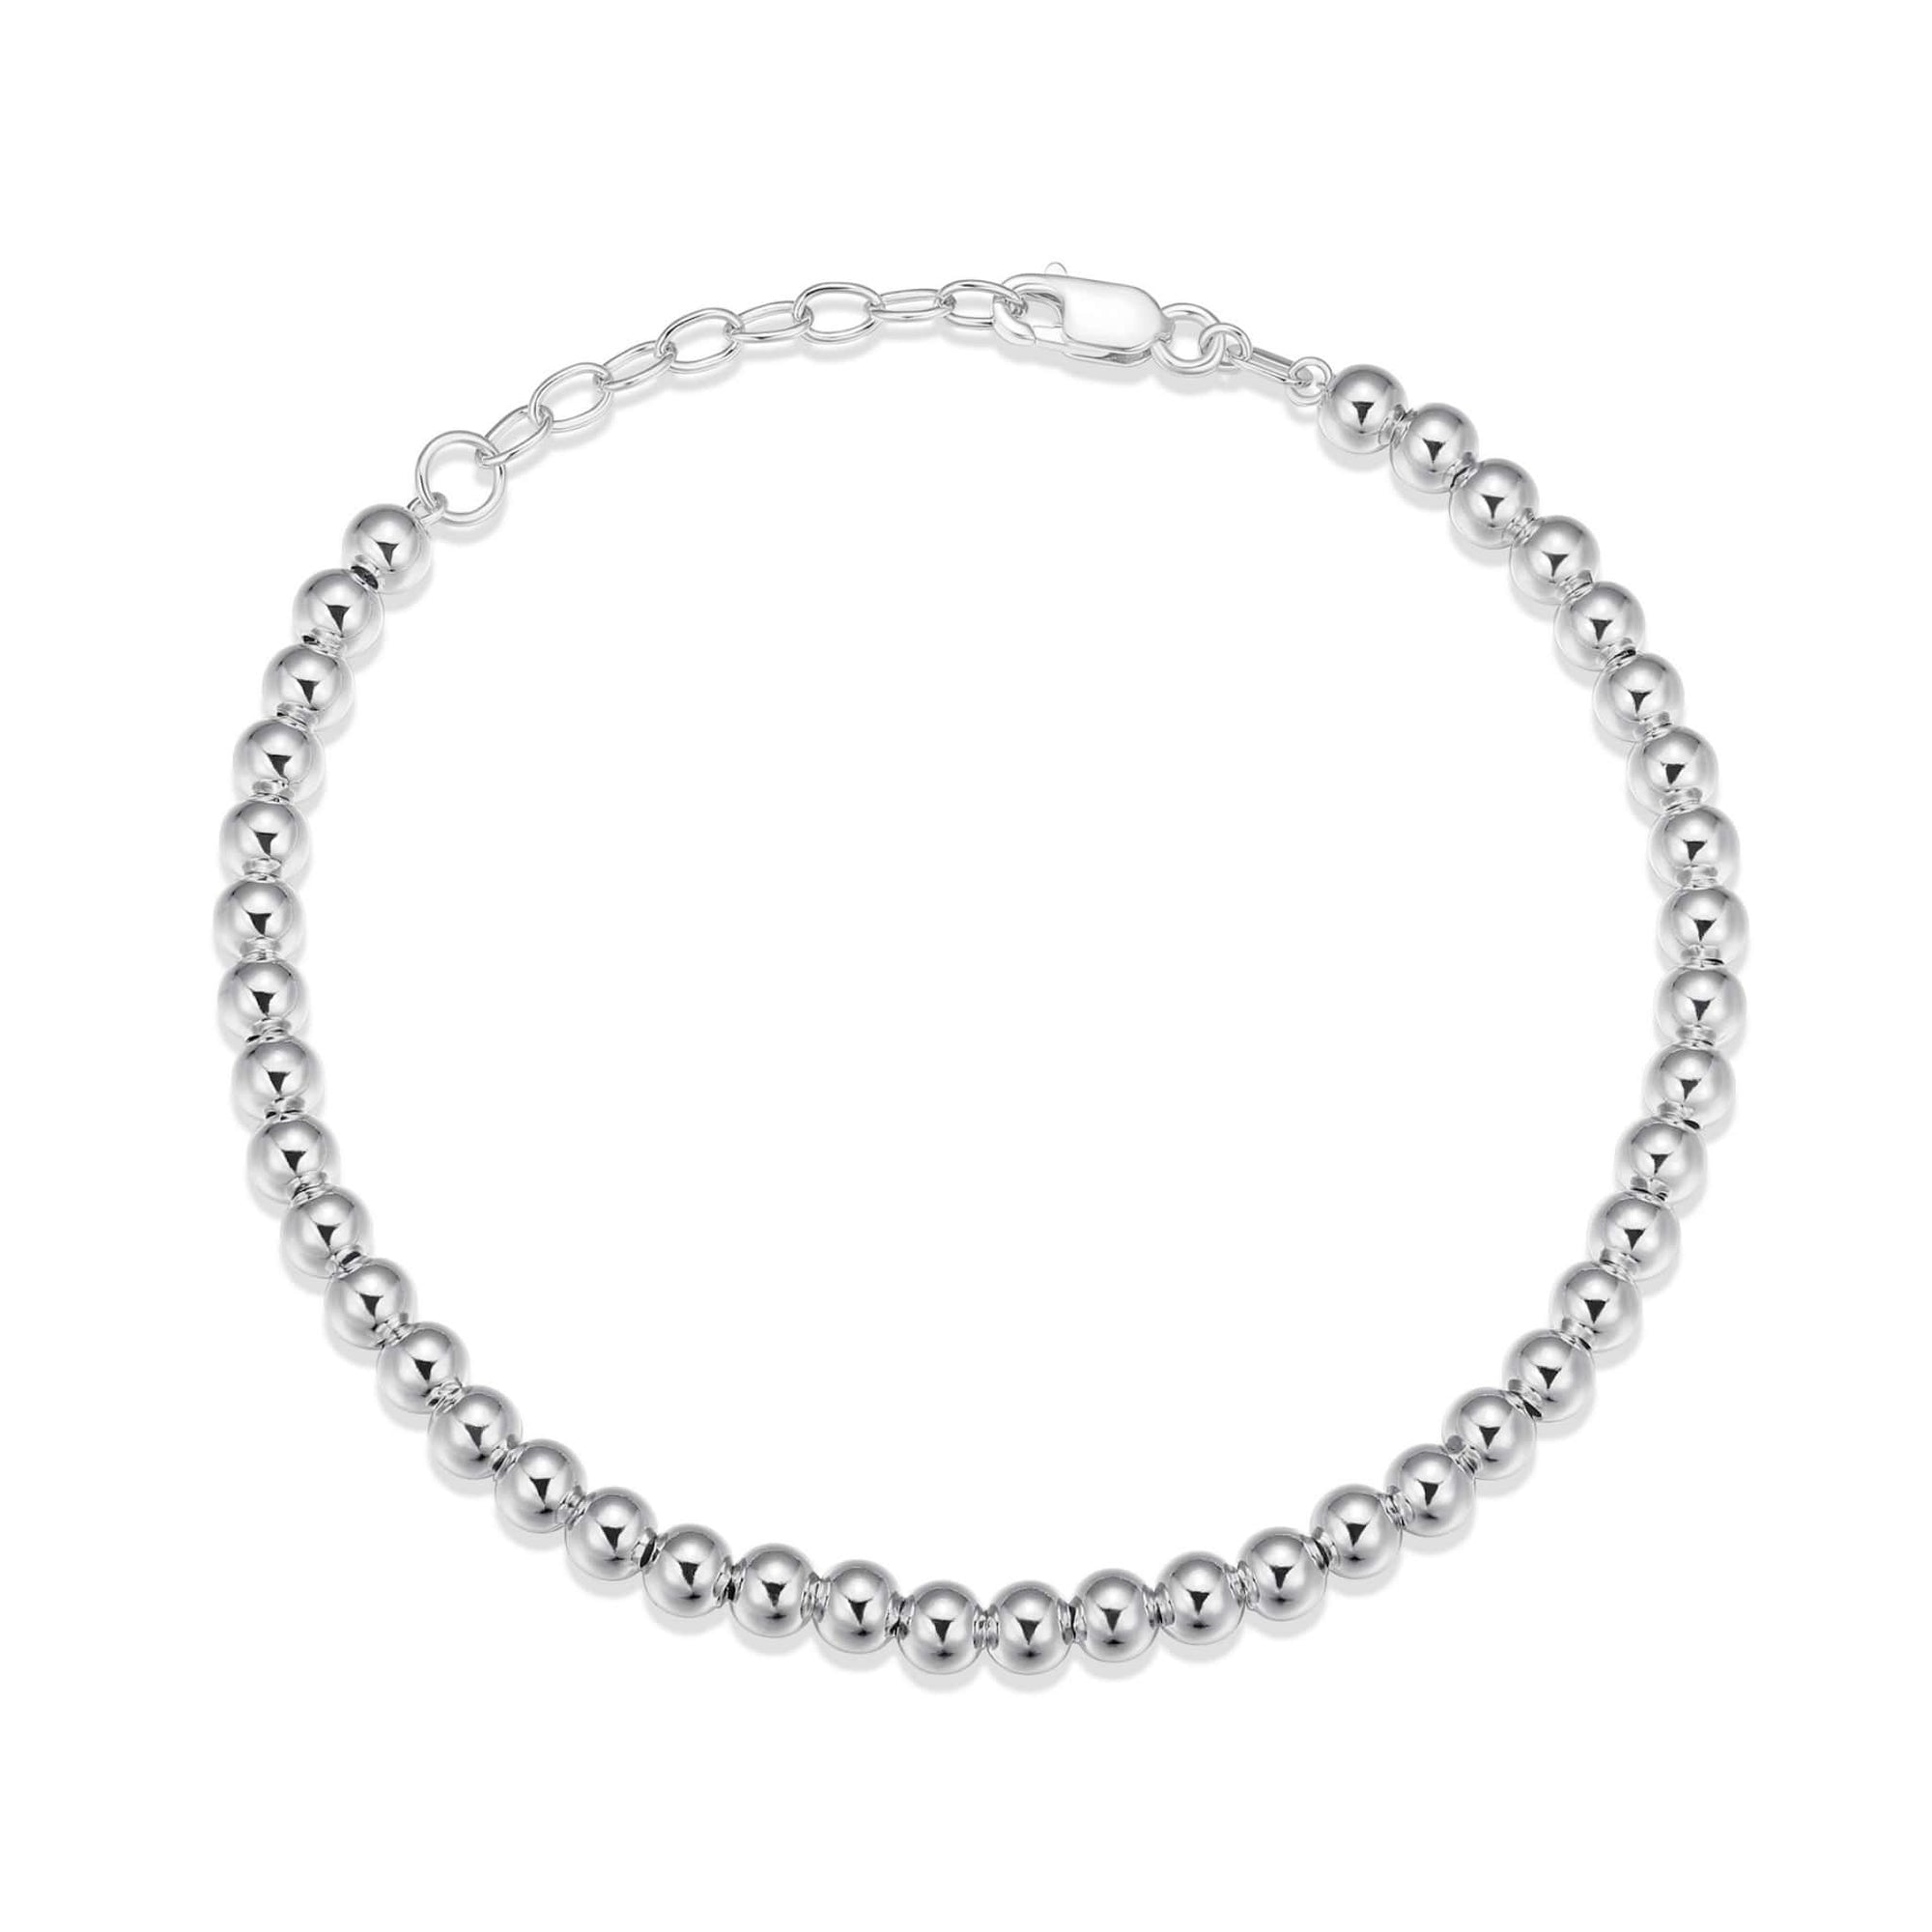 Simplicity Silver Bracelet at Arman's Jewellers